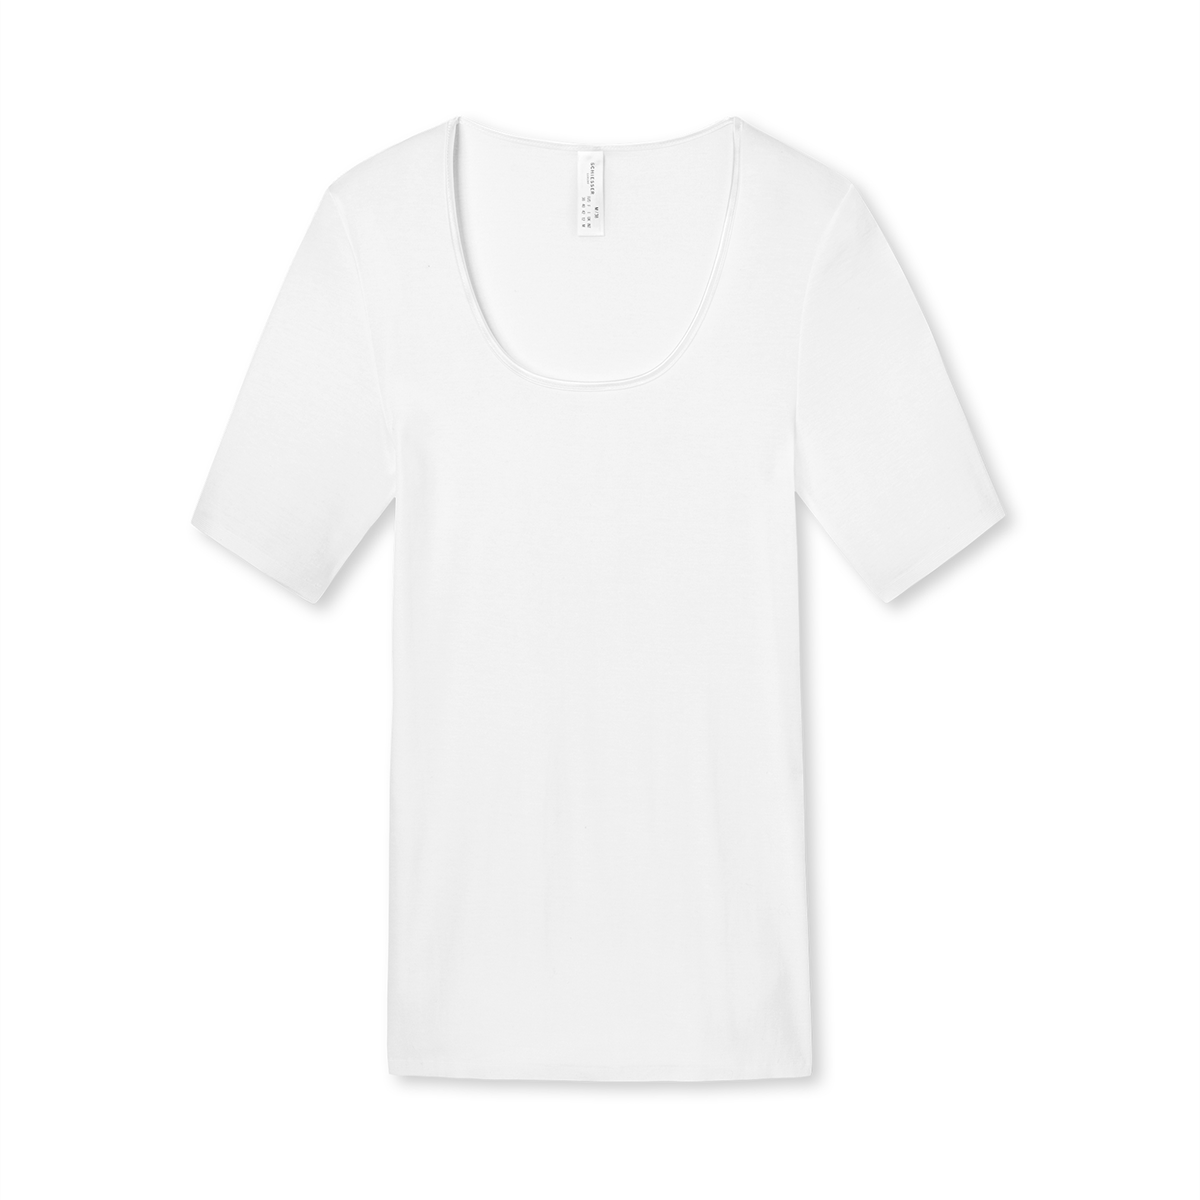 Se Schiesser T-shirt, Farve: Hvid, Størrelse: 46, Dame hos Netlingeri.dk